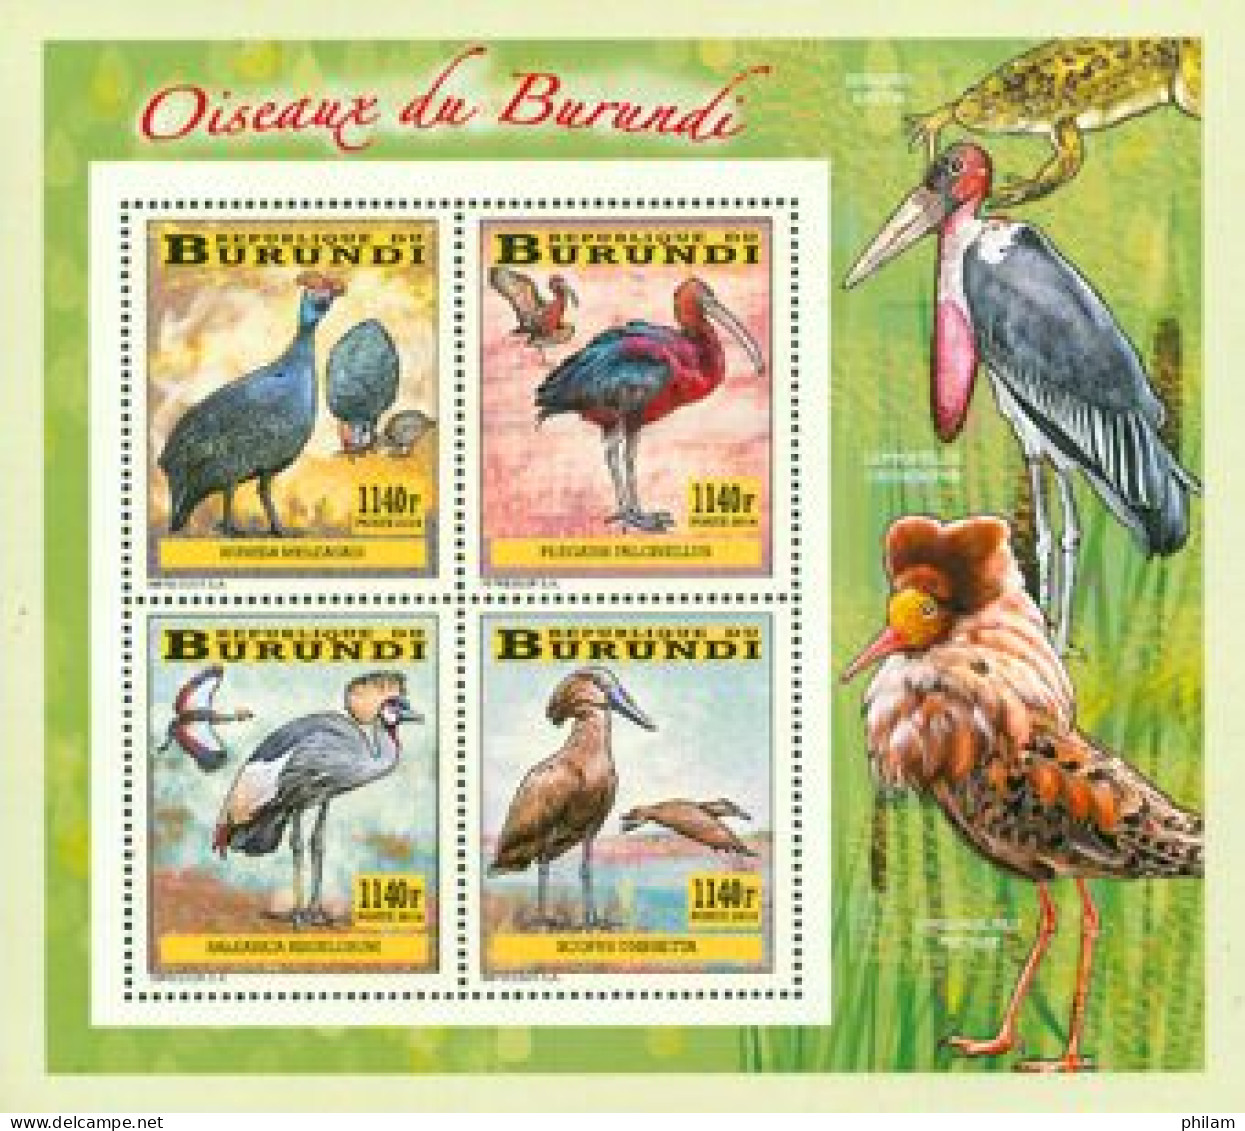 Burundi 2014 - Les Oiseaux Du Burundi - Echassiers - Bloc Collectif - Storks & Long-legged Wading Birds